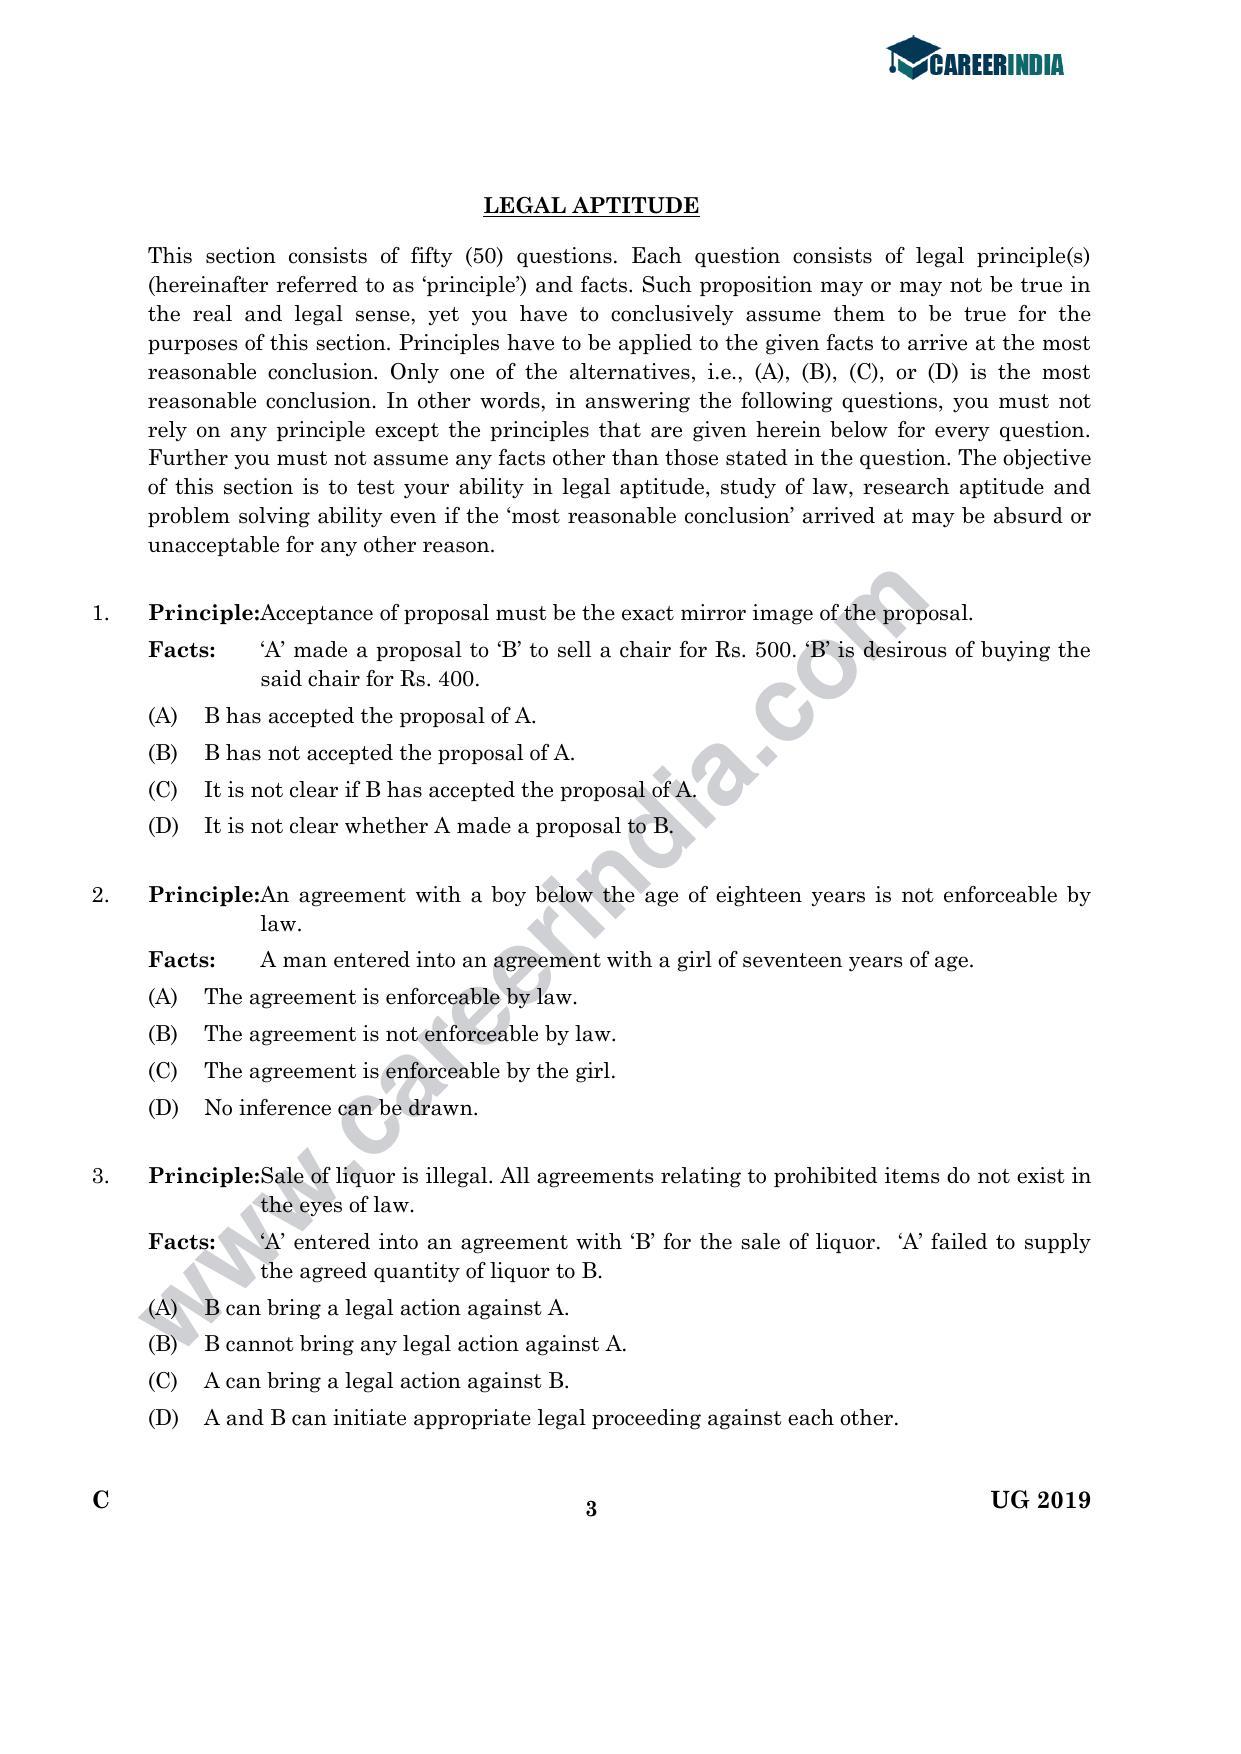 CLAT 2019 UG Legal-Aptitude Question Paper - Page 2